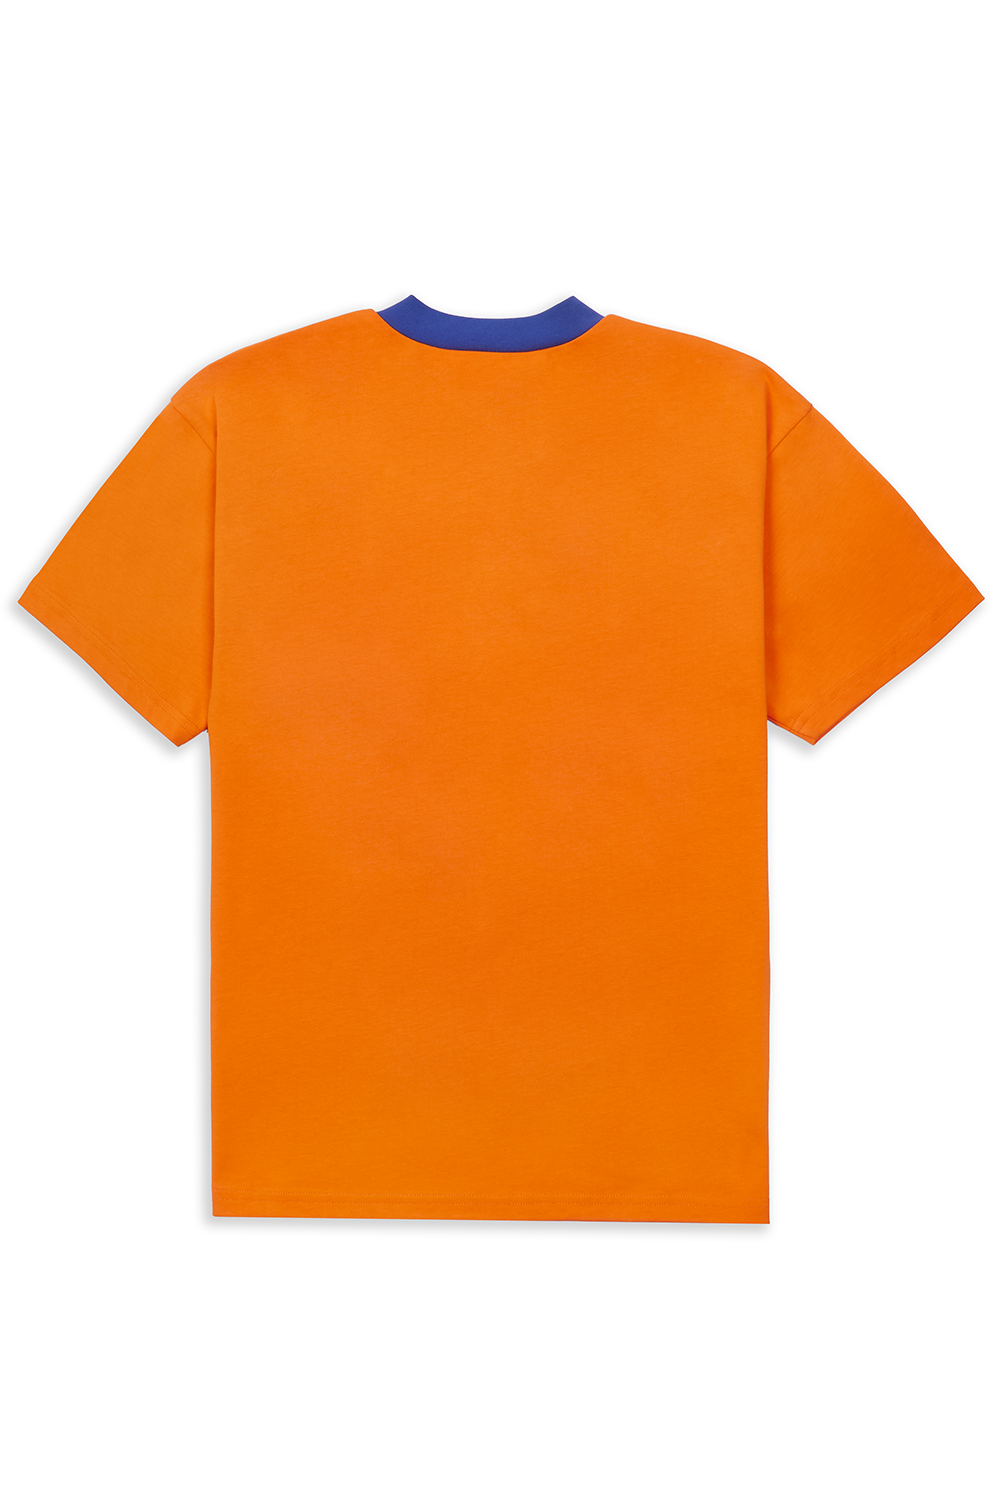 Netherlands Euros Inspired T-Shirt